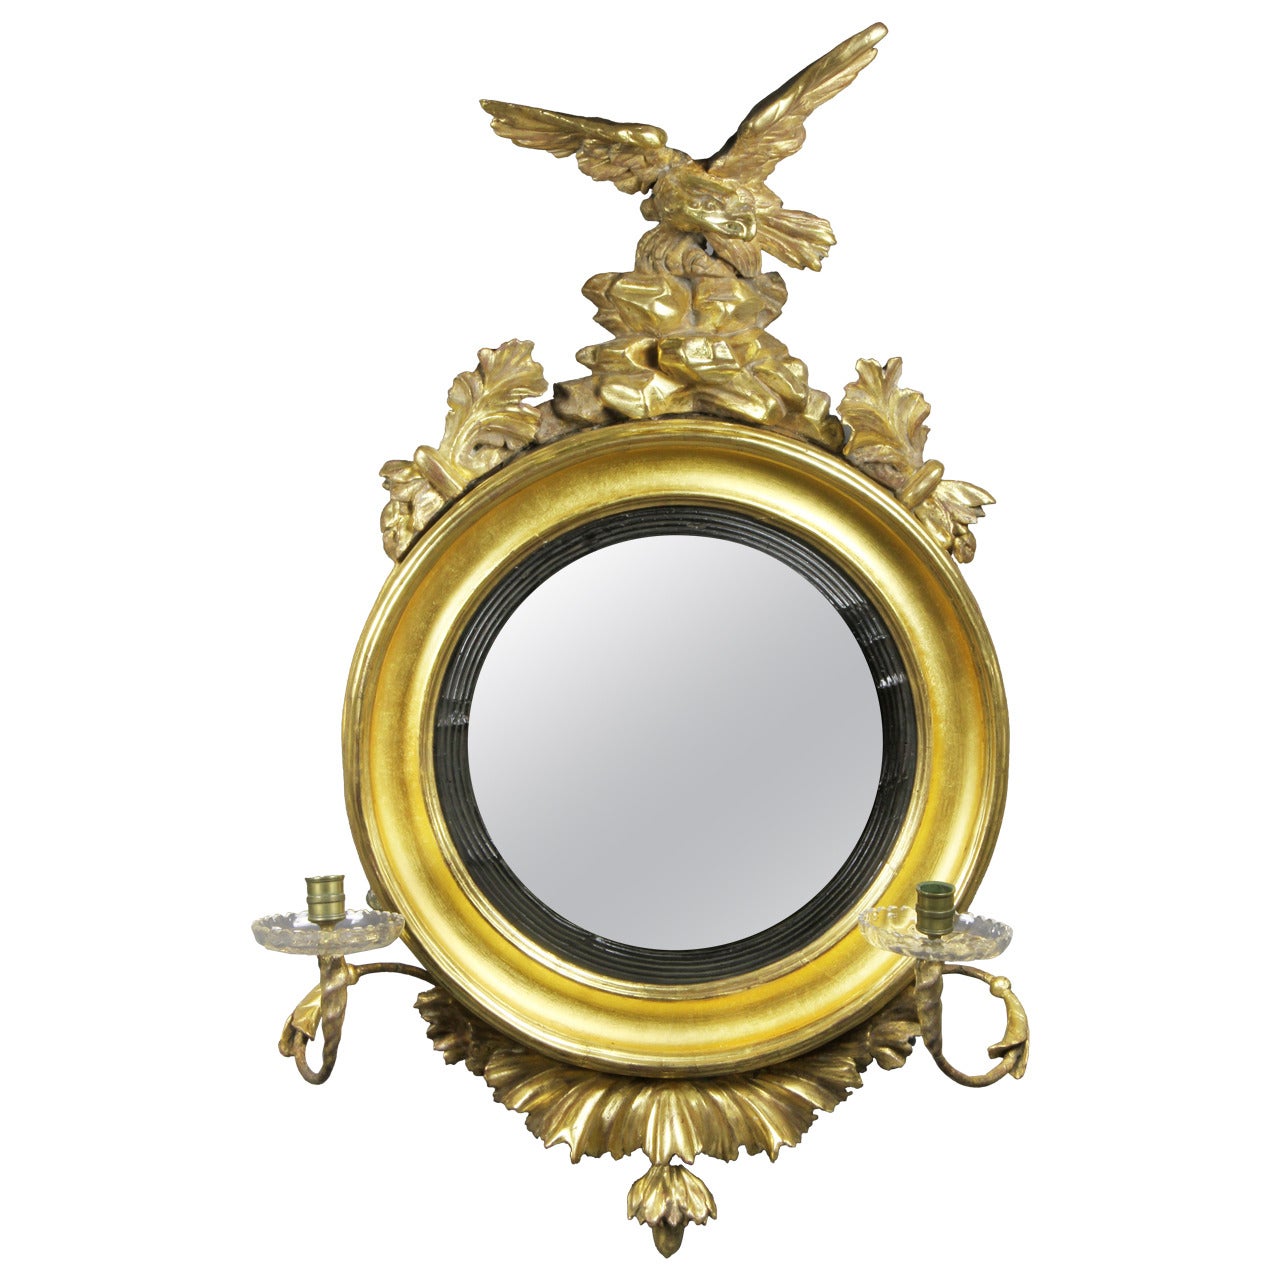 Regency Giltwood Girondole Convex Mirror